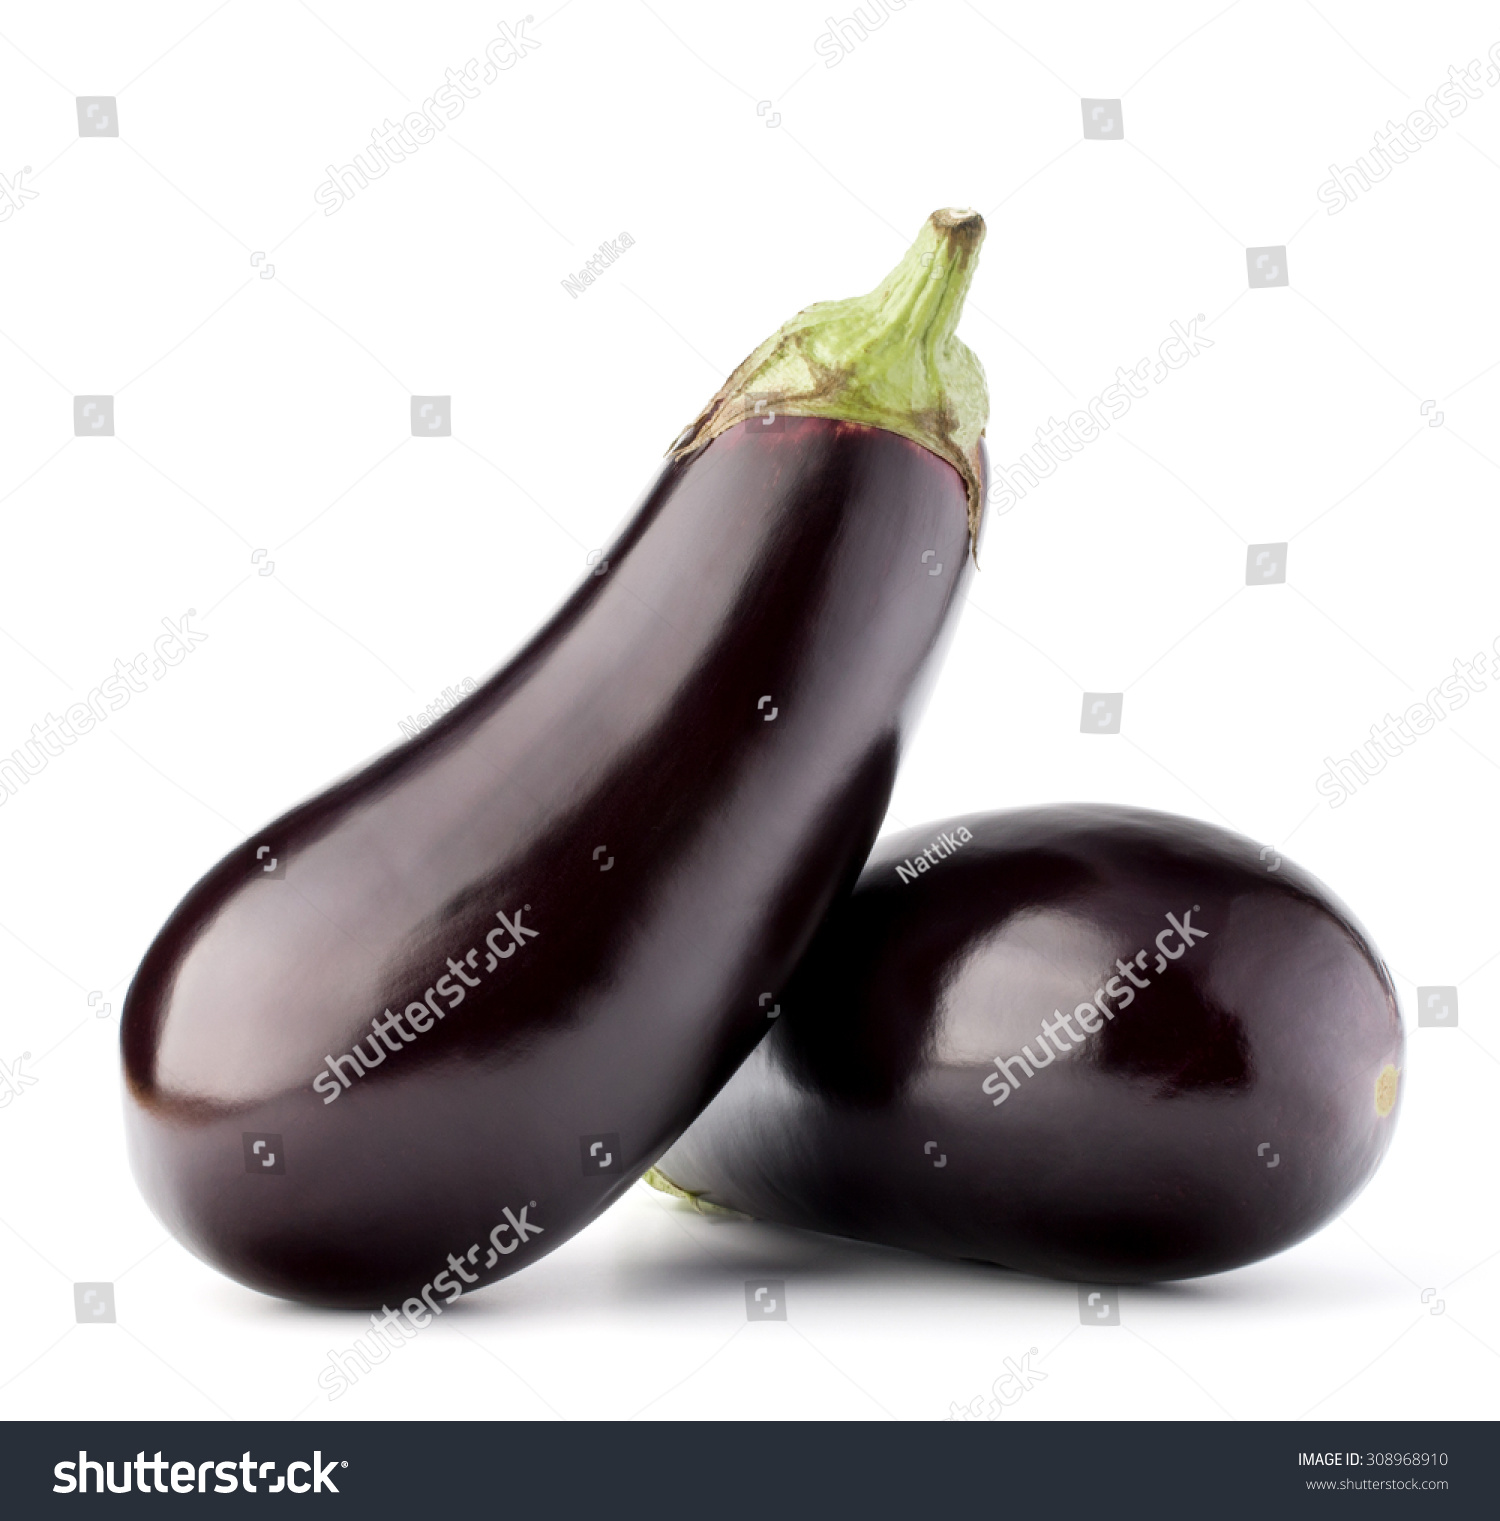 Eggplant or aubergine vegetable isolated on white background cutout #308968910